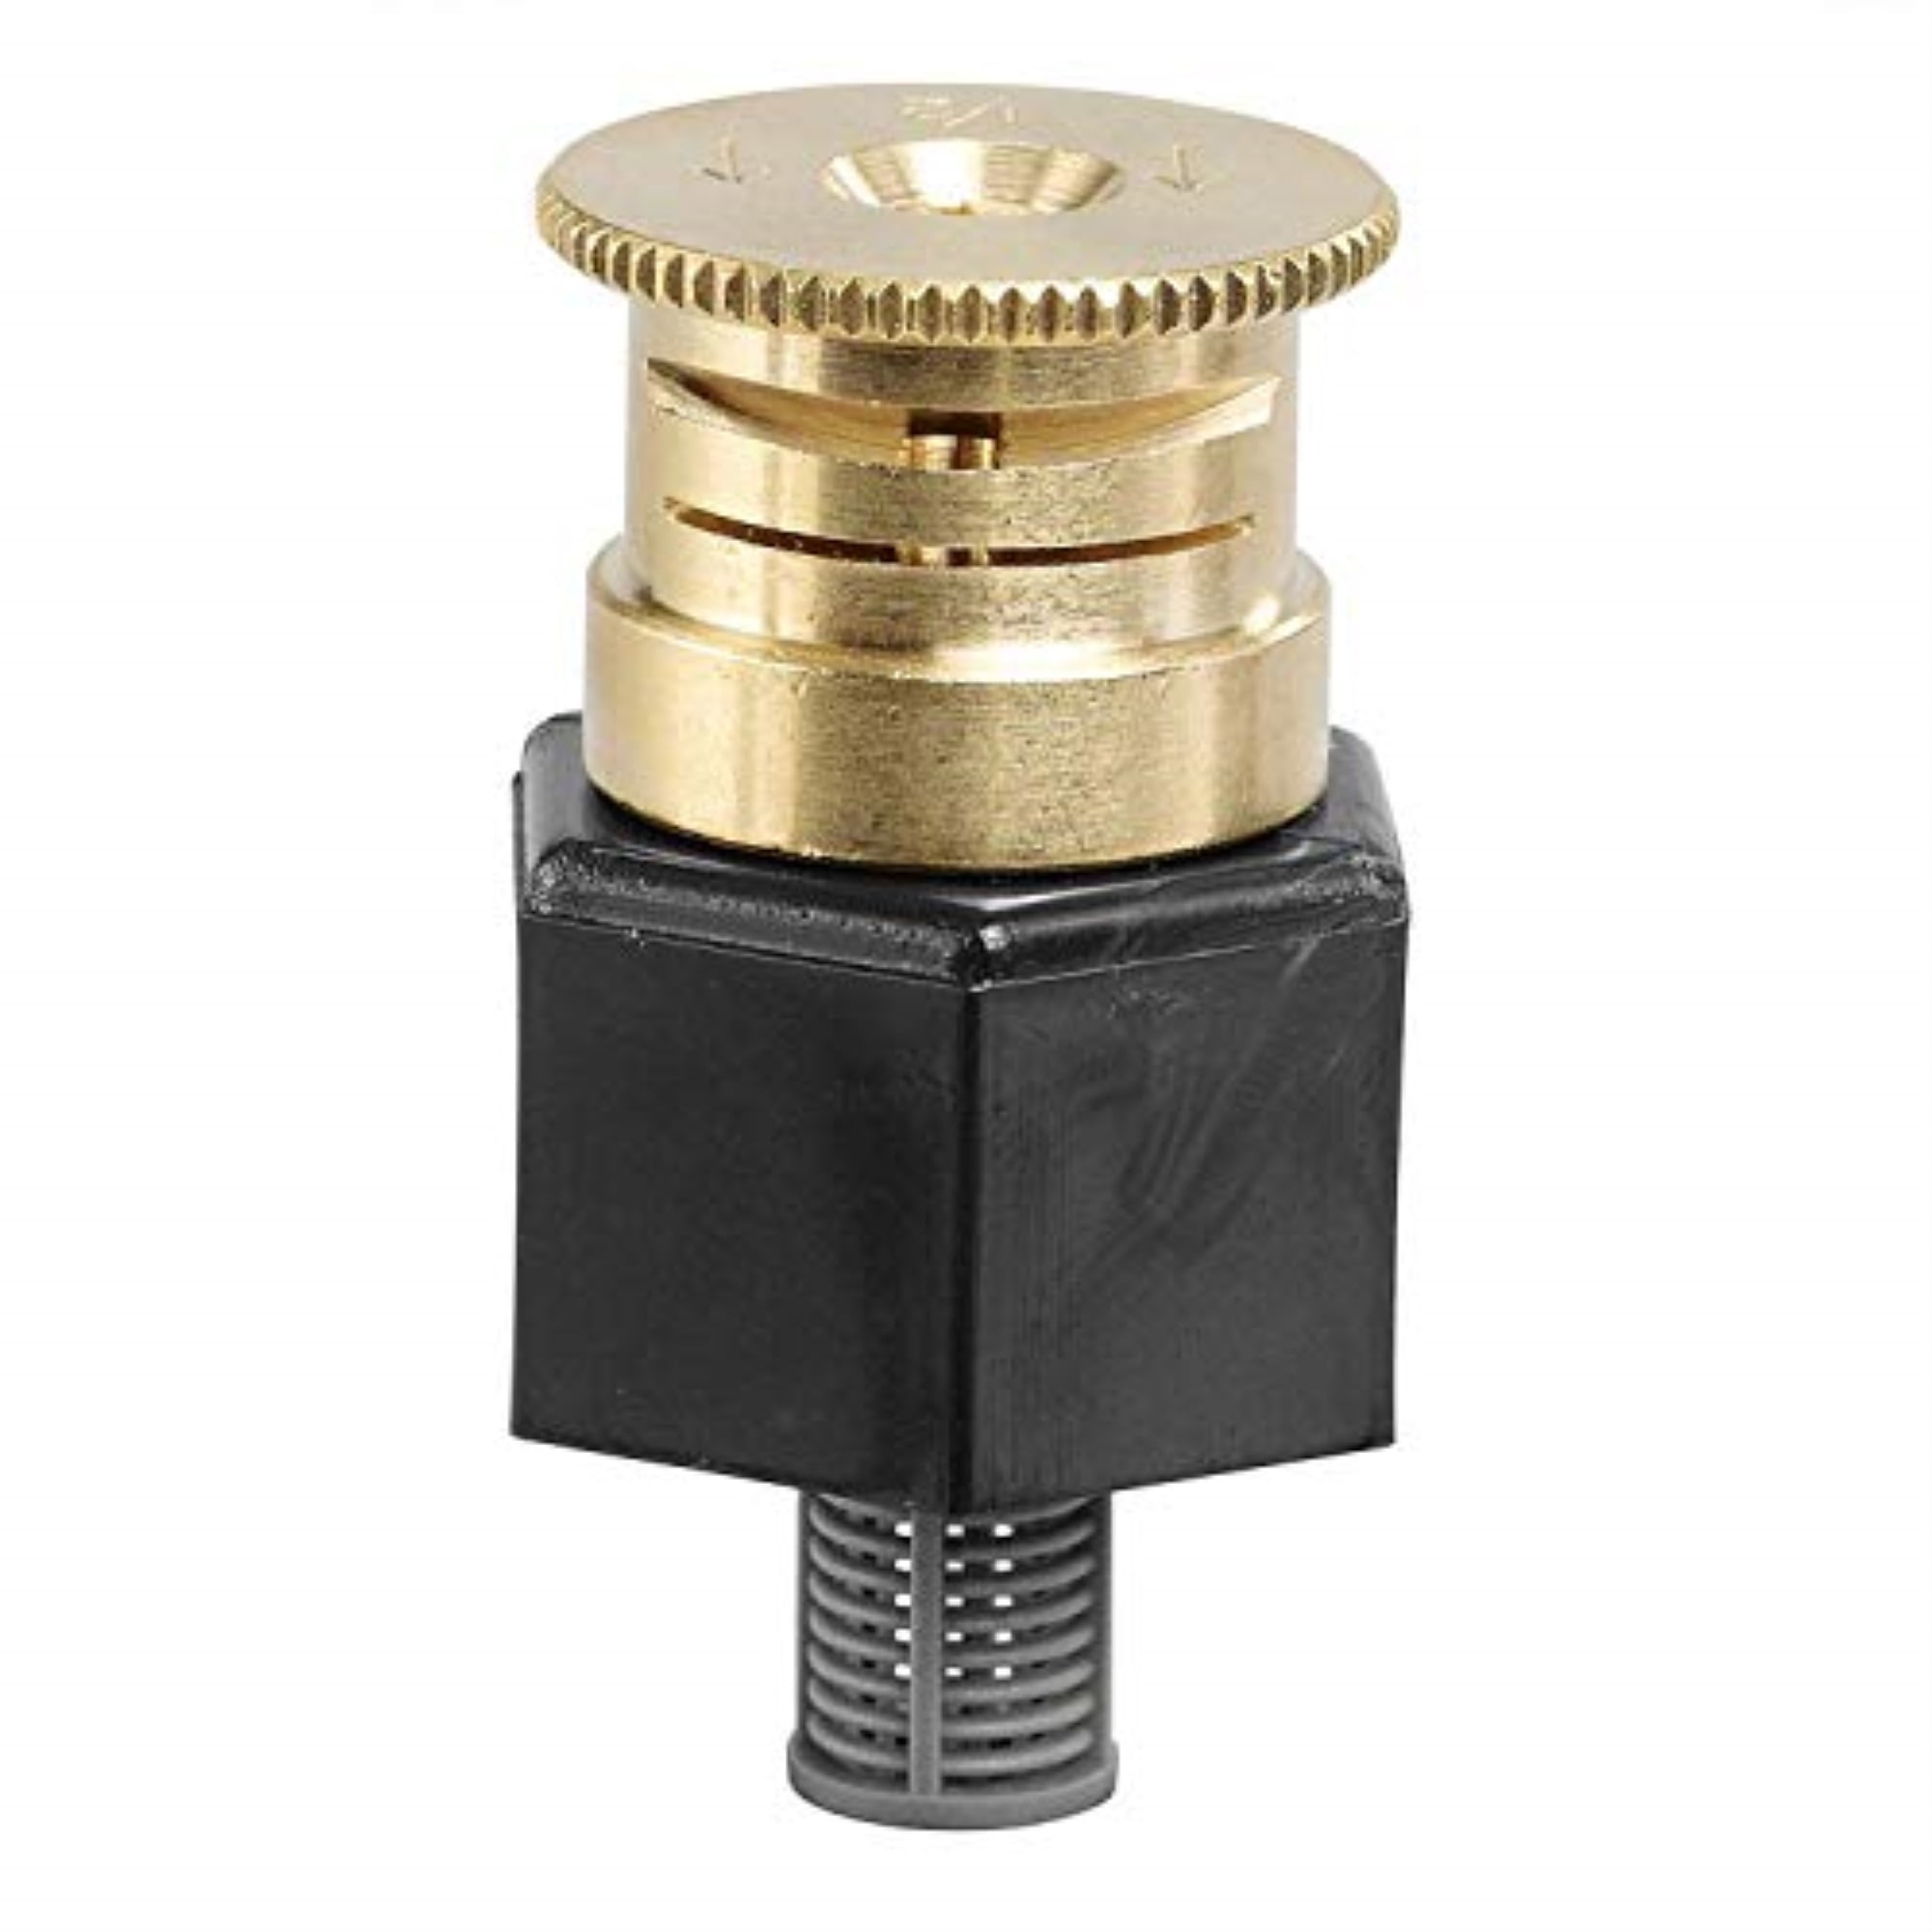 Orbit Adjustable Pattern Brass Irrigation Shrub Head Sprinkler, 15